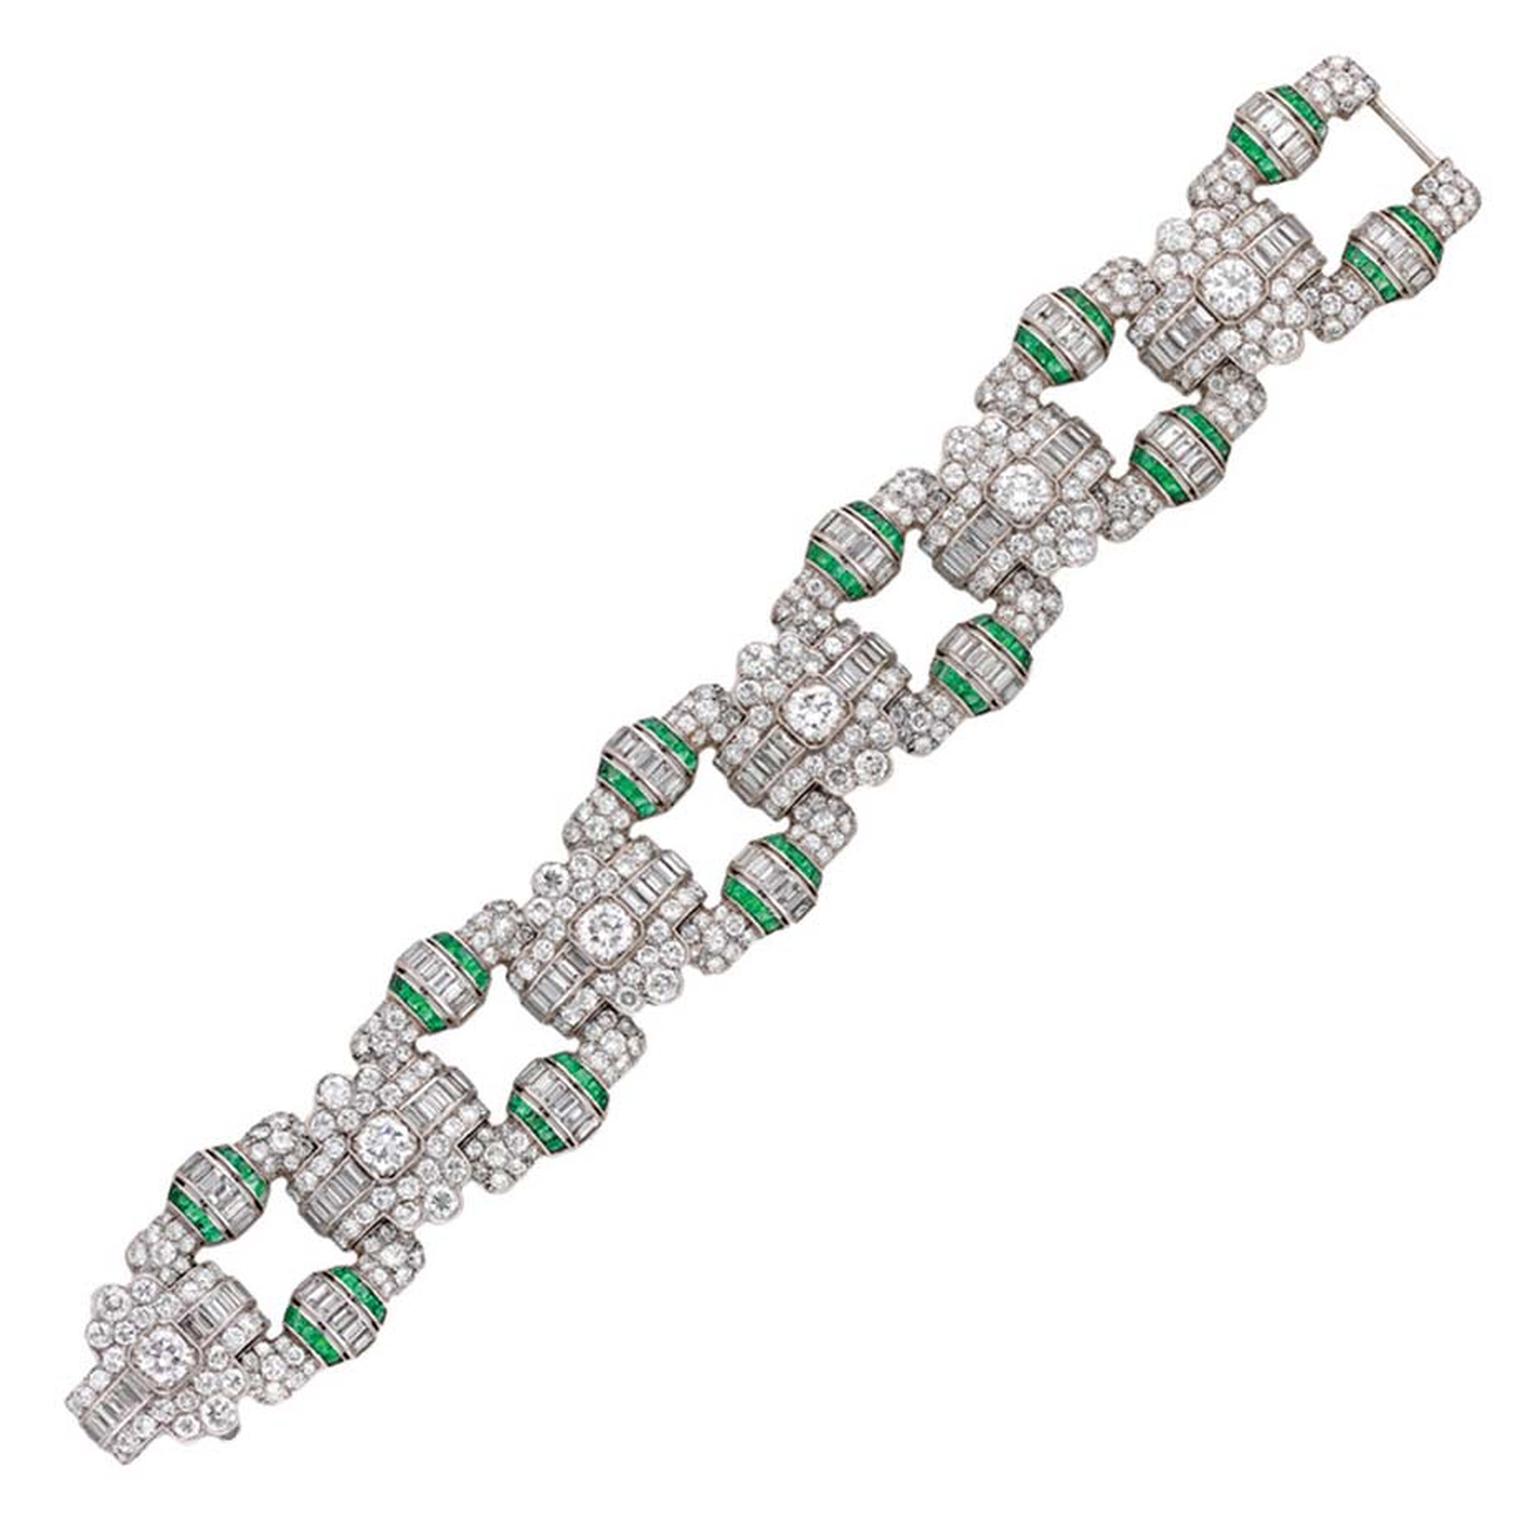 An Art Deco emerald diamond panel bracelet from Bentley & Skinner on 1stdibs